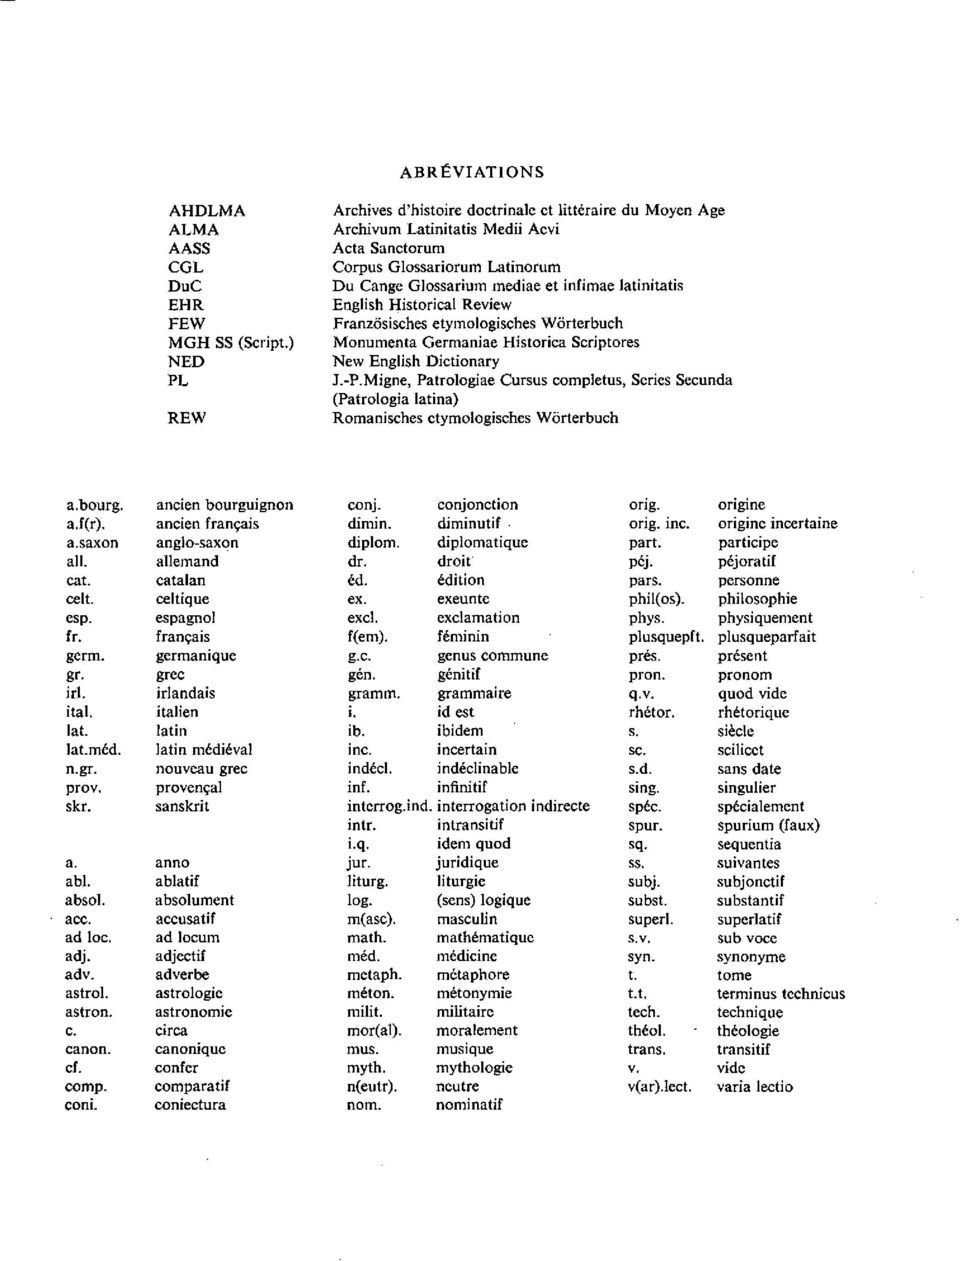 mediae et infimae latinitatis English Ristorical Review Franzôsisches etymologisches Wôrterbuch Monumenta Germaniae Historica Scriptores New English Dictionary J.-P.